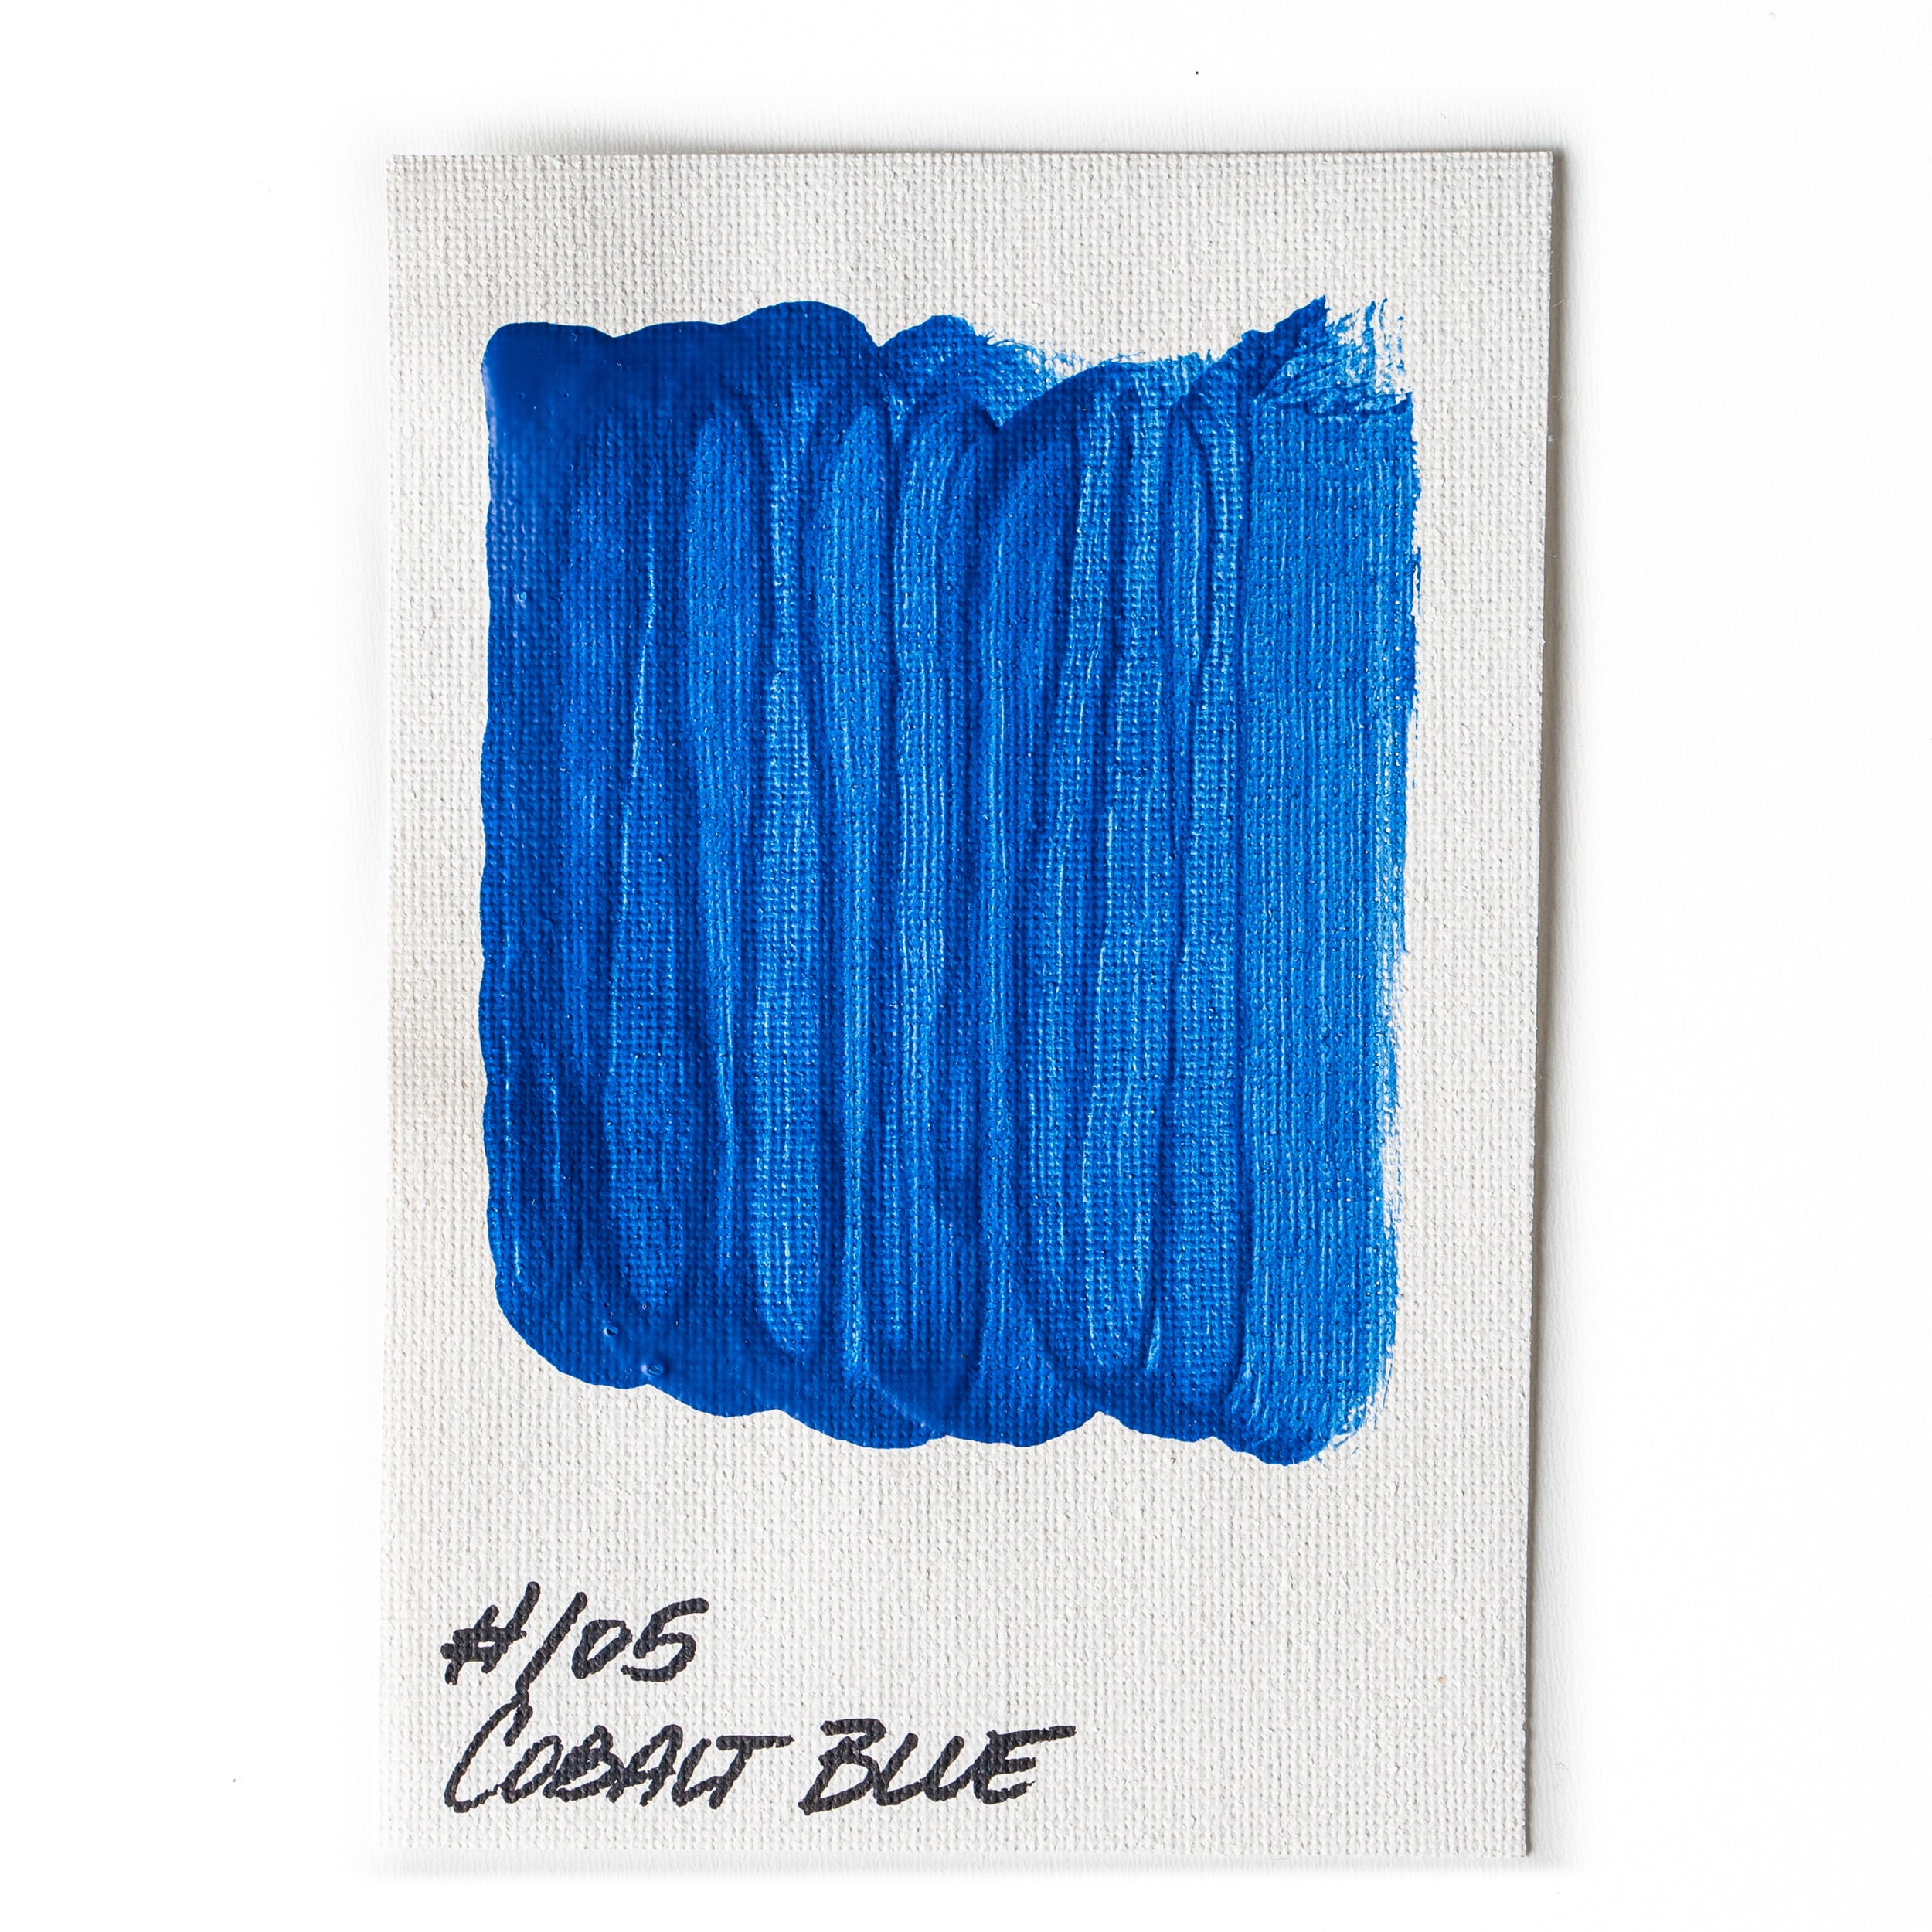 105 Cobalt Blue Acrylic Paint - Lightfast - Opaque